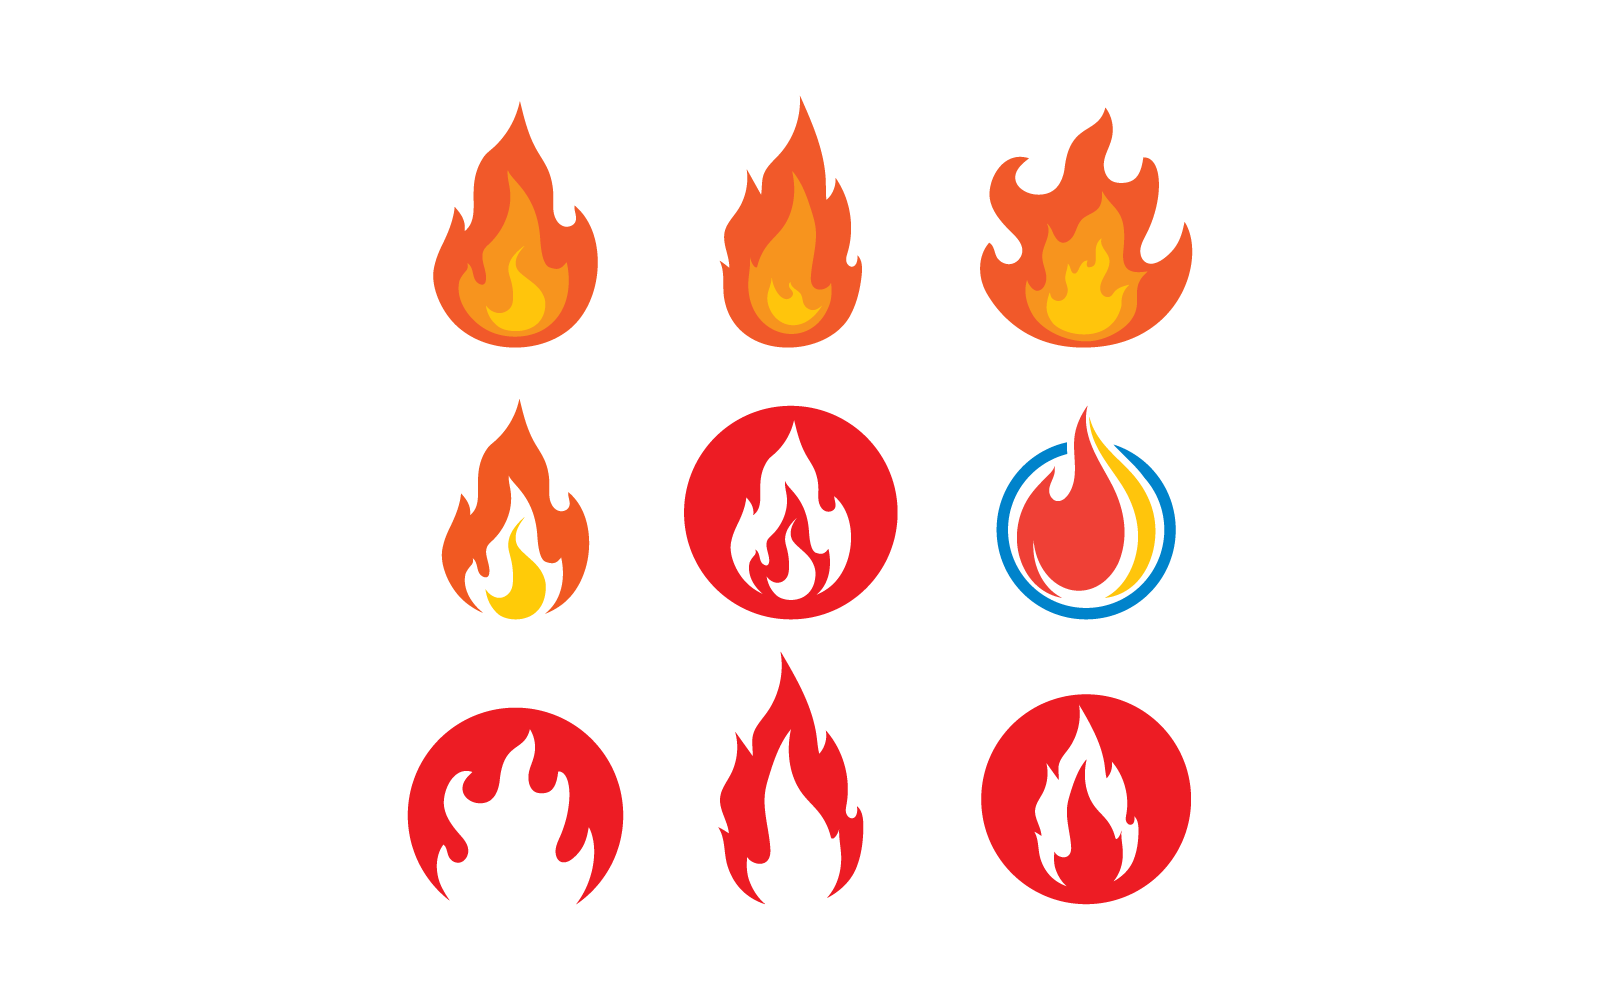 Вектор логотипа пламени огня, шаблон концепции дизайна нефти, газа и энергетики